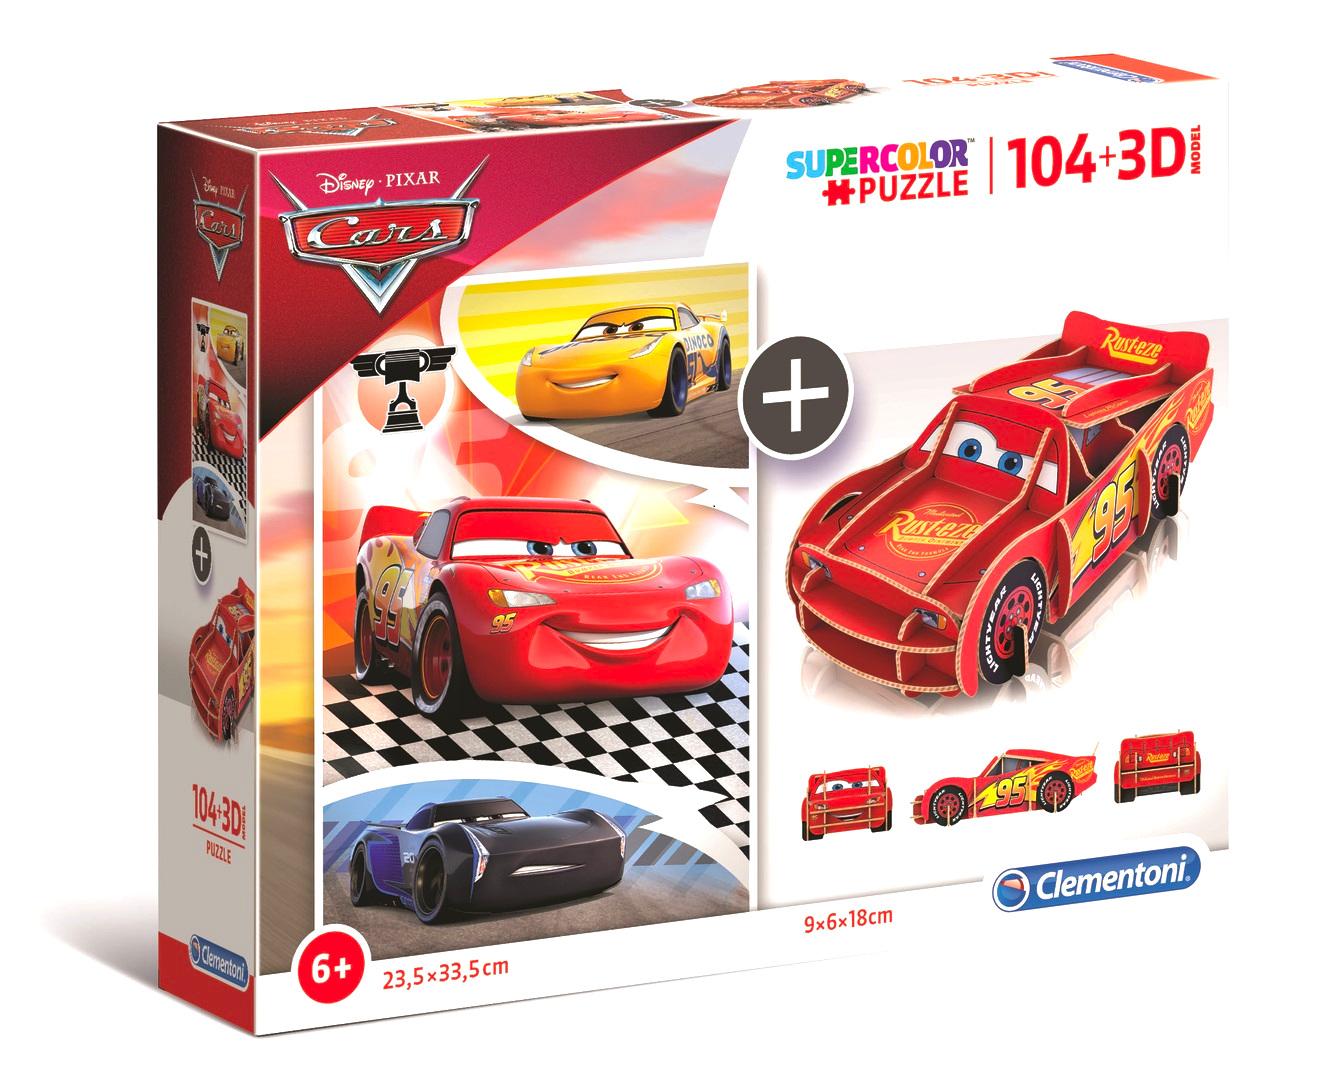 Por separado ballena Con otras bandas Puzzles Clementoni: Puzzles Infantiles 3D Disney Cars